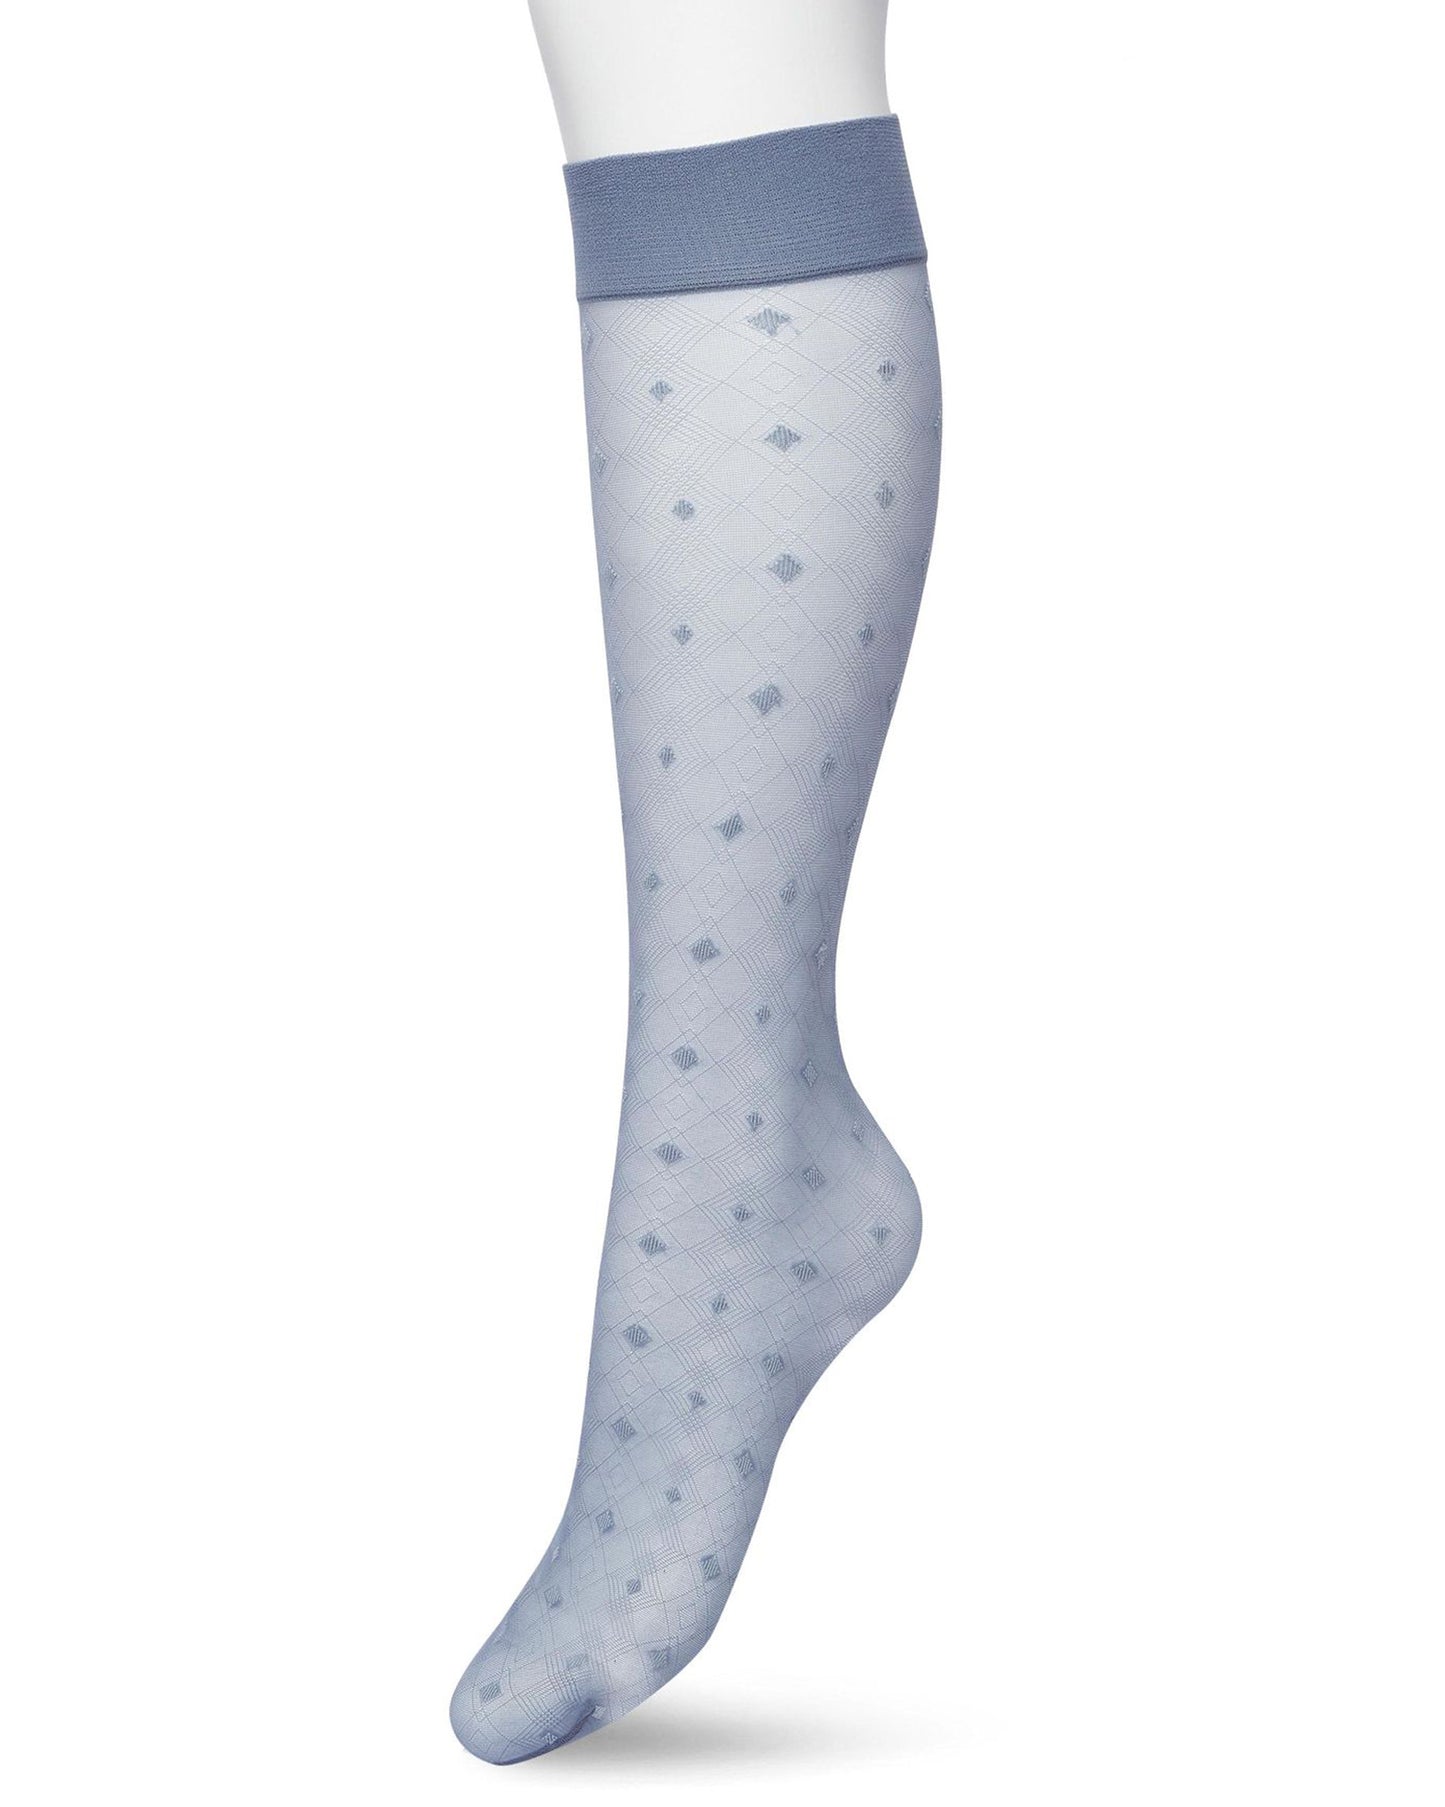 Bonnie Doon Geometric Knee-Highs - Sheer denim blue fashion knee-high socks with a geometric linear diamond pattern with opaque dotted diamonds and deep elasticated comfort cuff